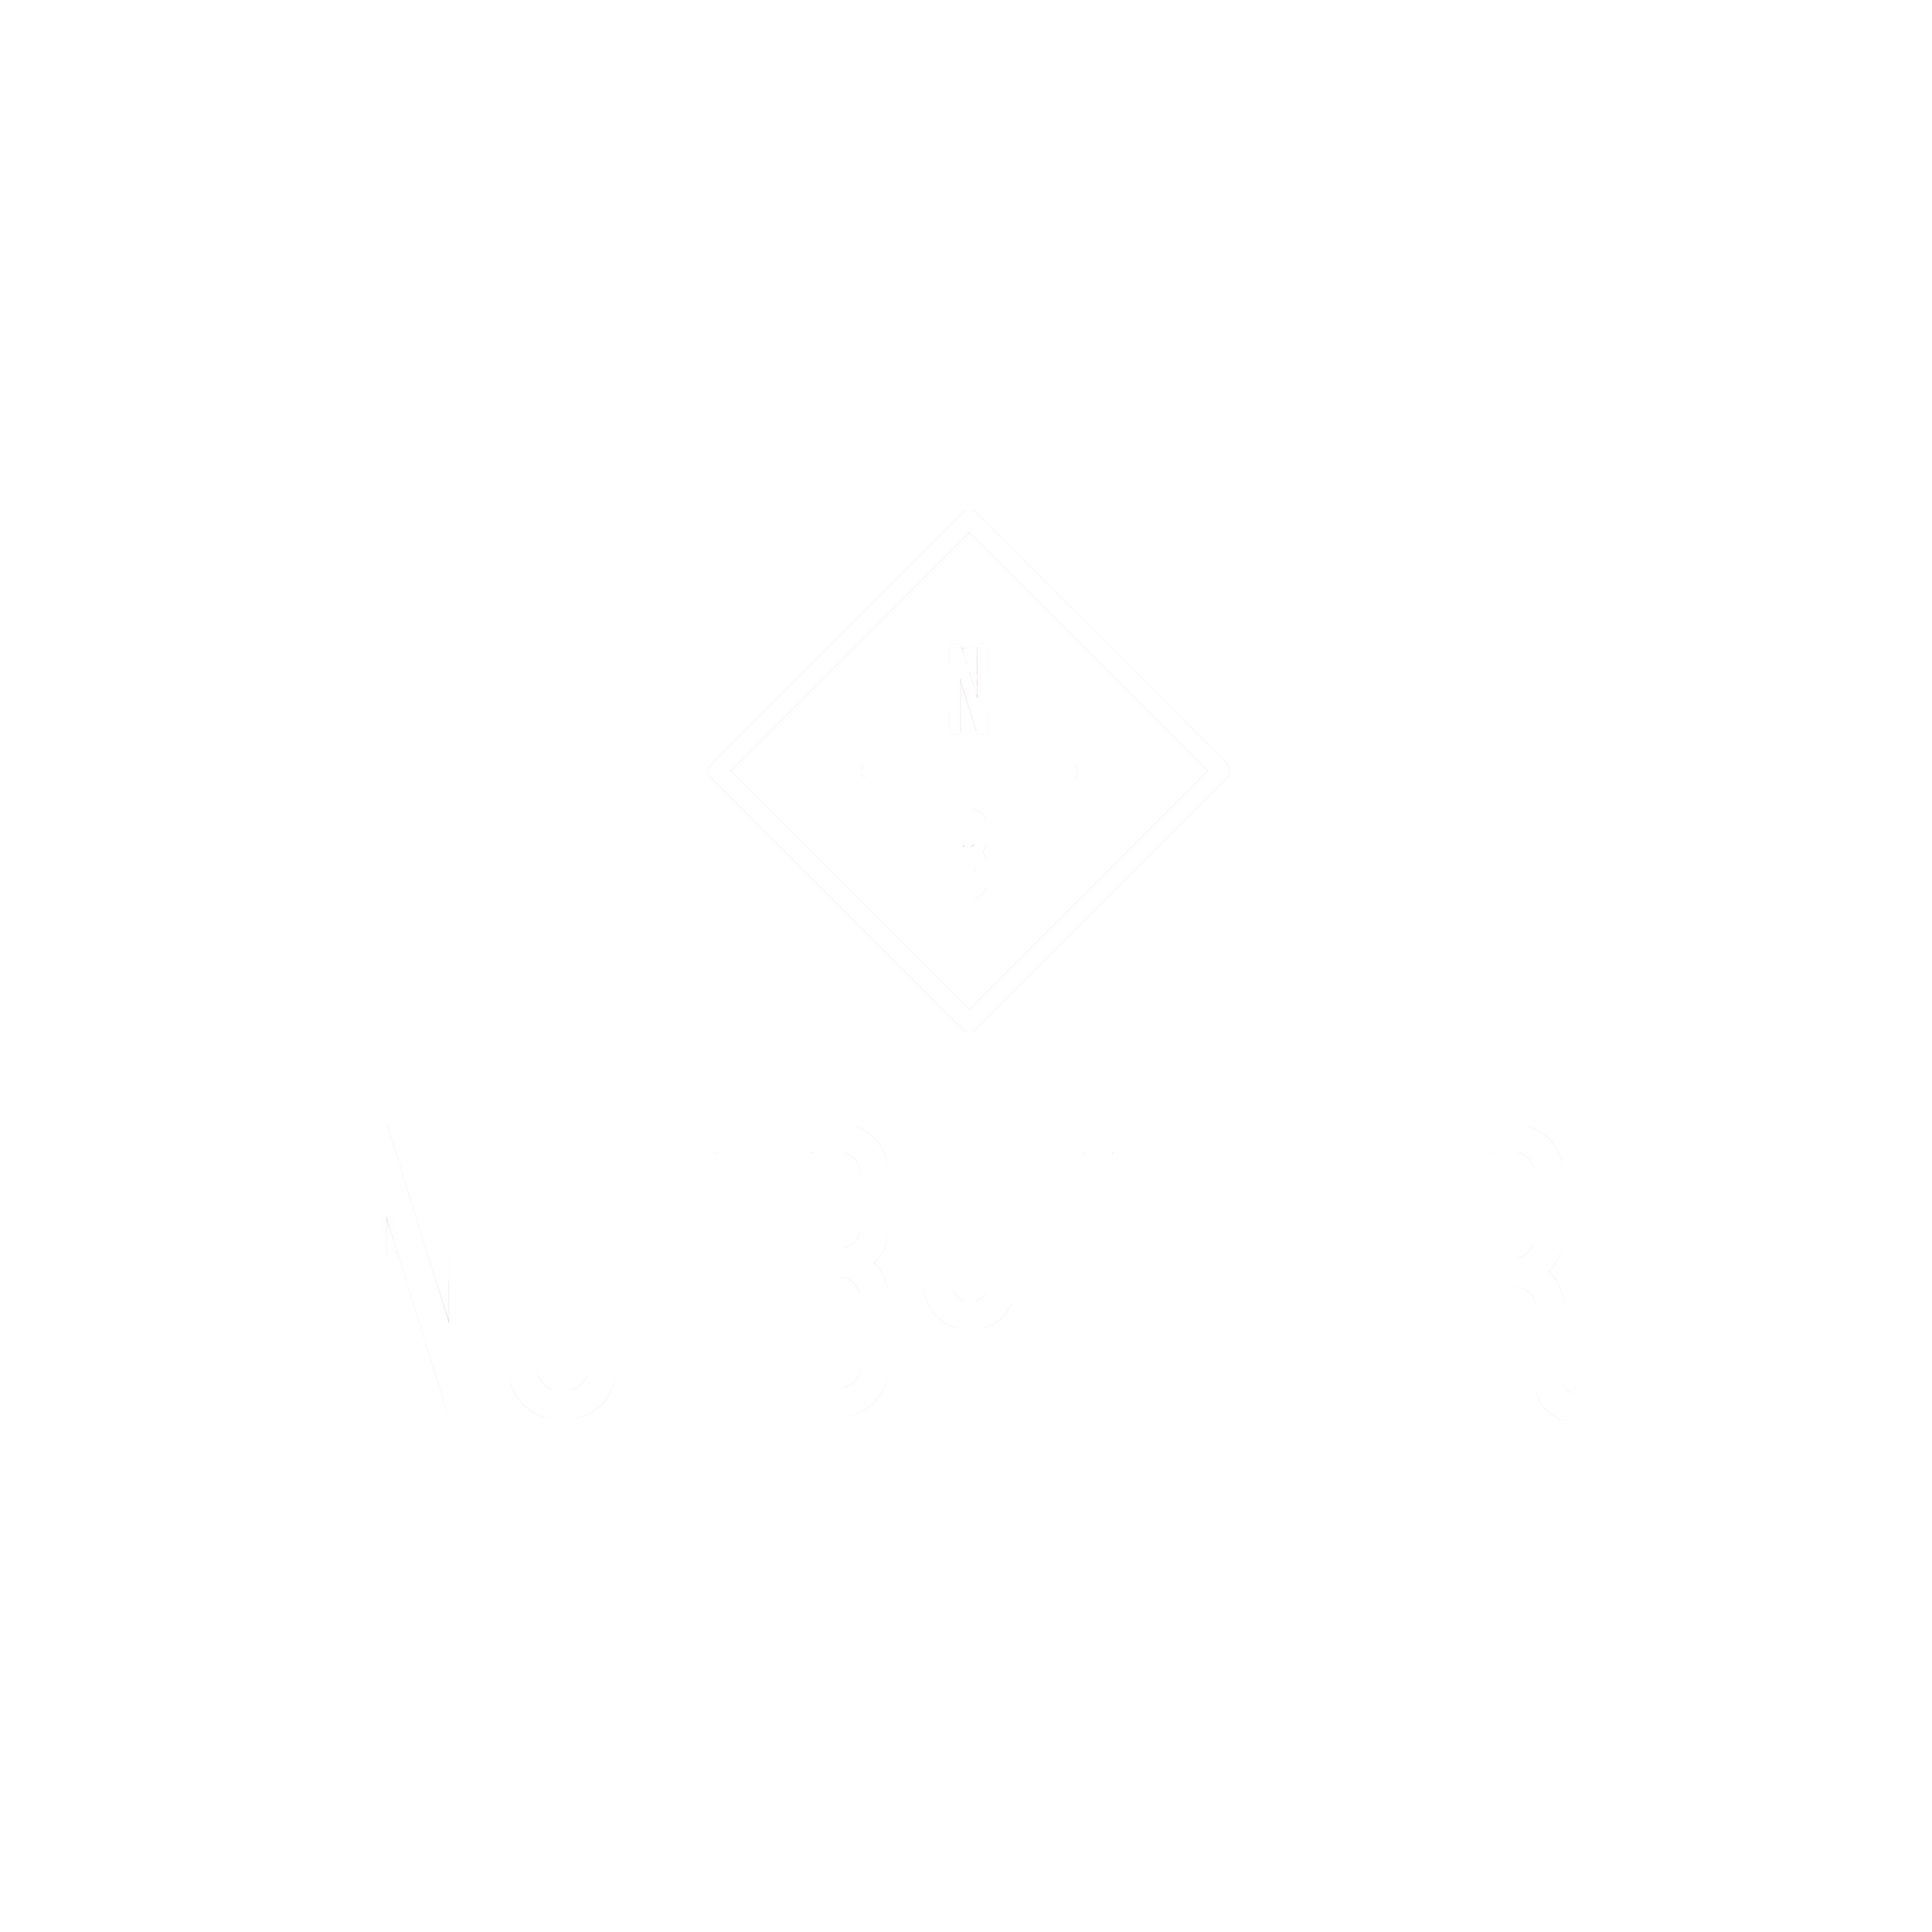 NutButter Restaurant Videography